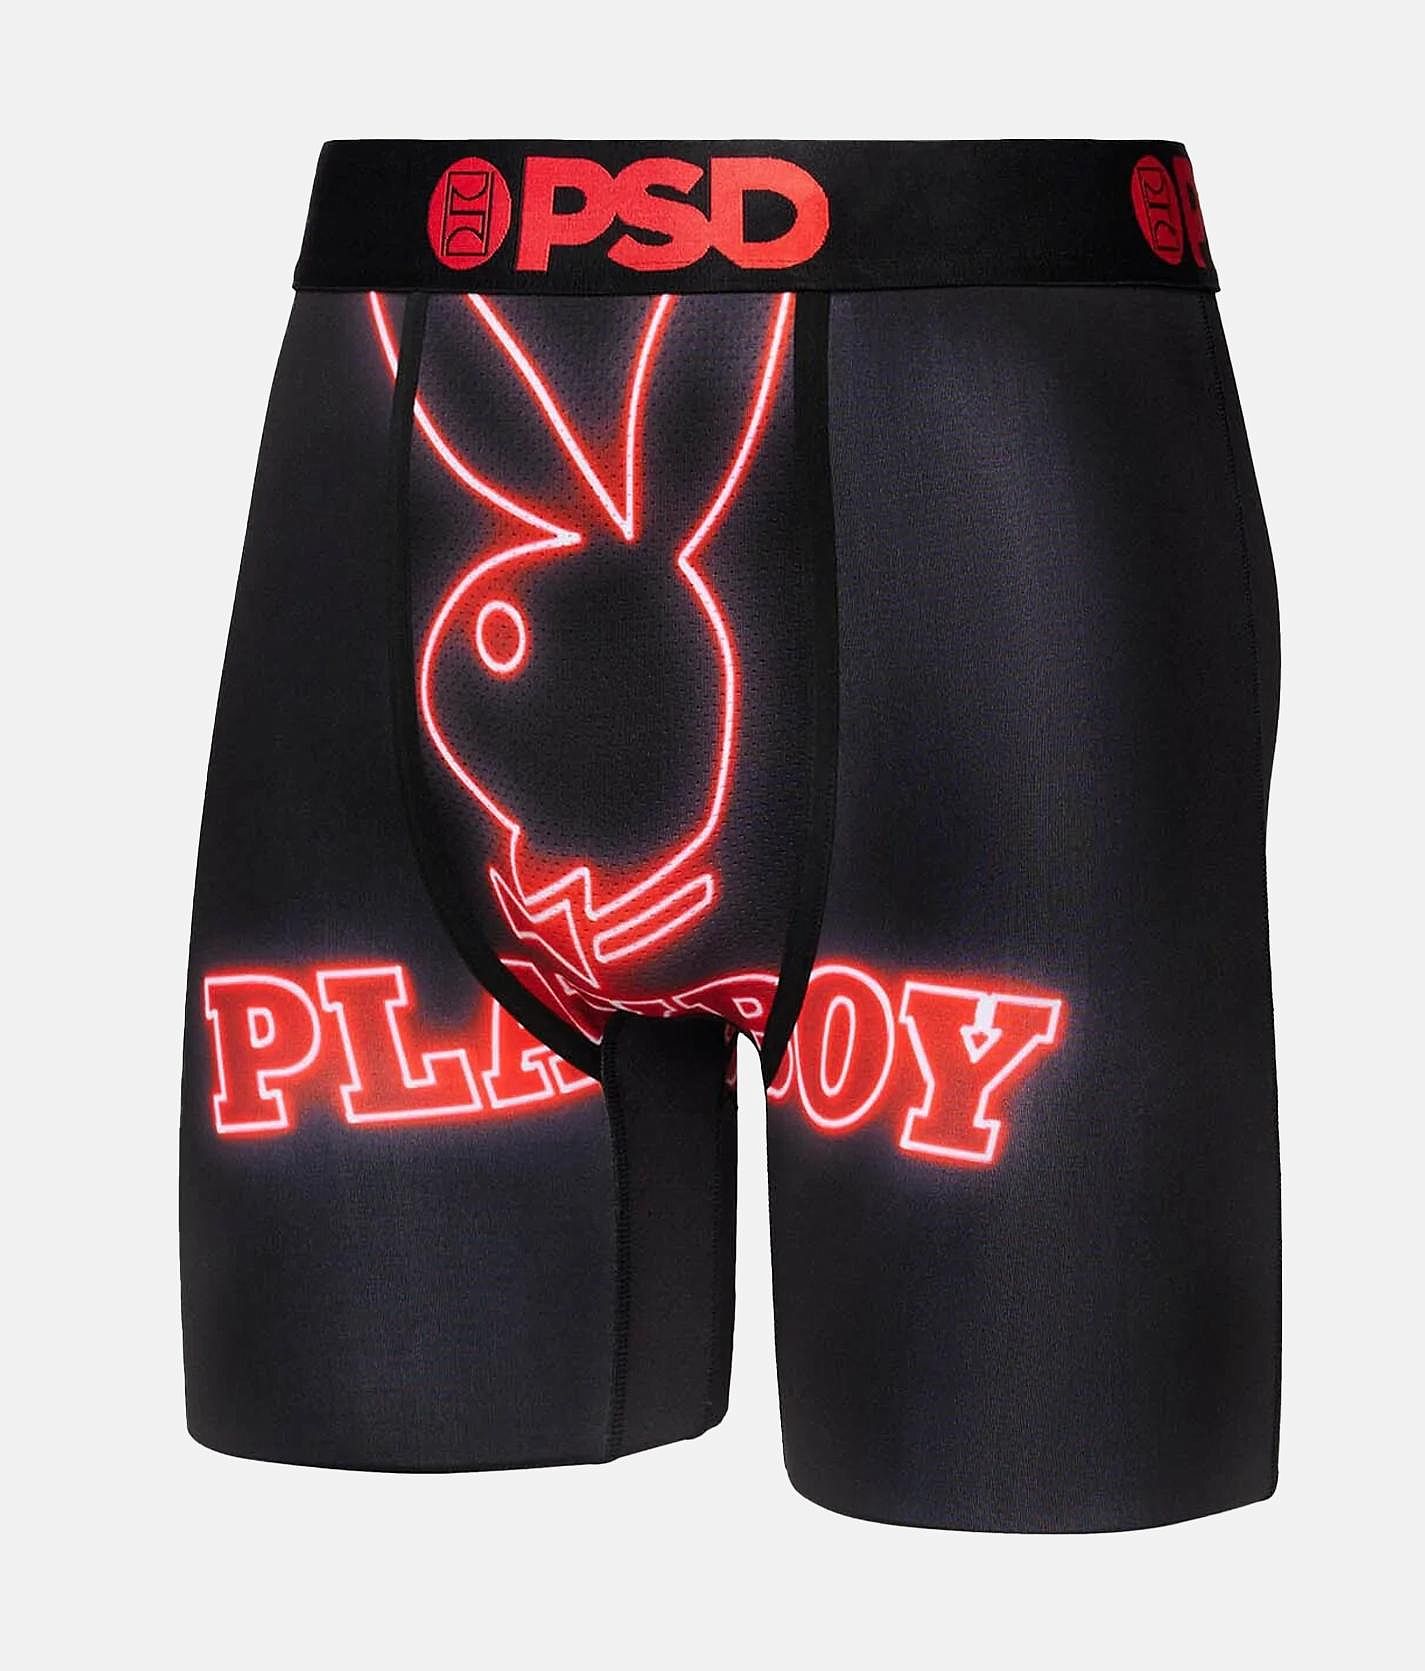 PSD Playboy Neon Stretch Boxer Briefs - Men's Boxers in Black